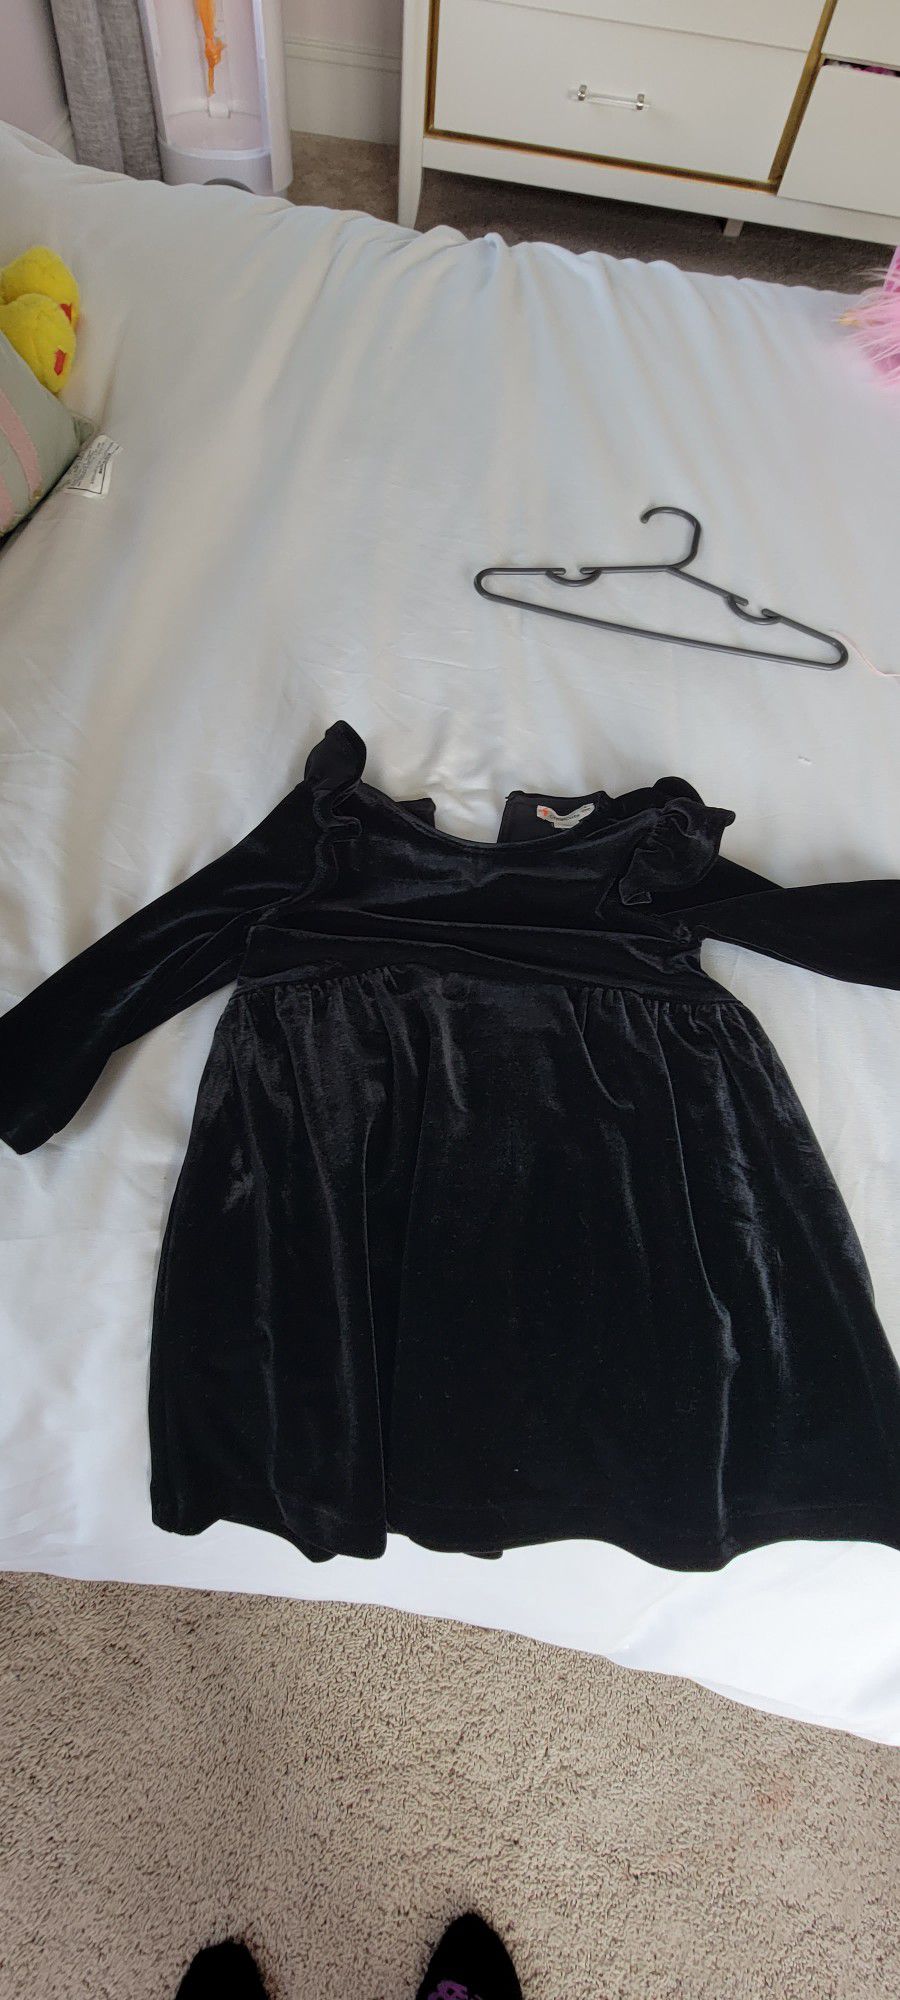 Nwt Crewcuts Black “Velvet” Party Dress - 2 Toddler